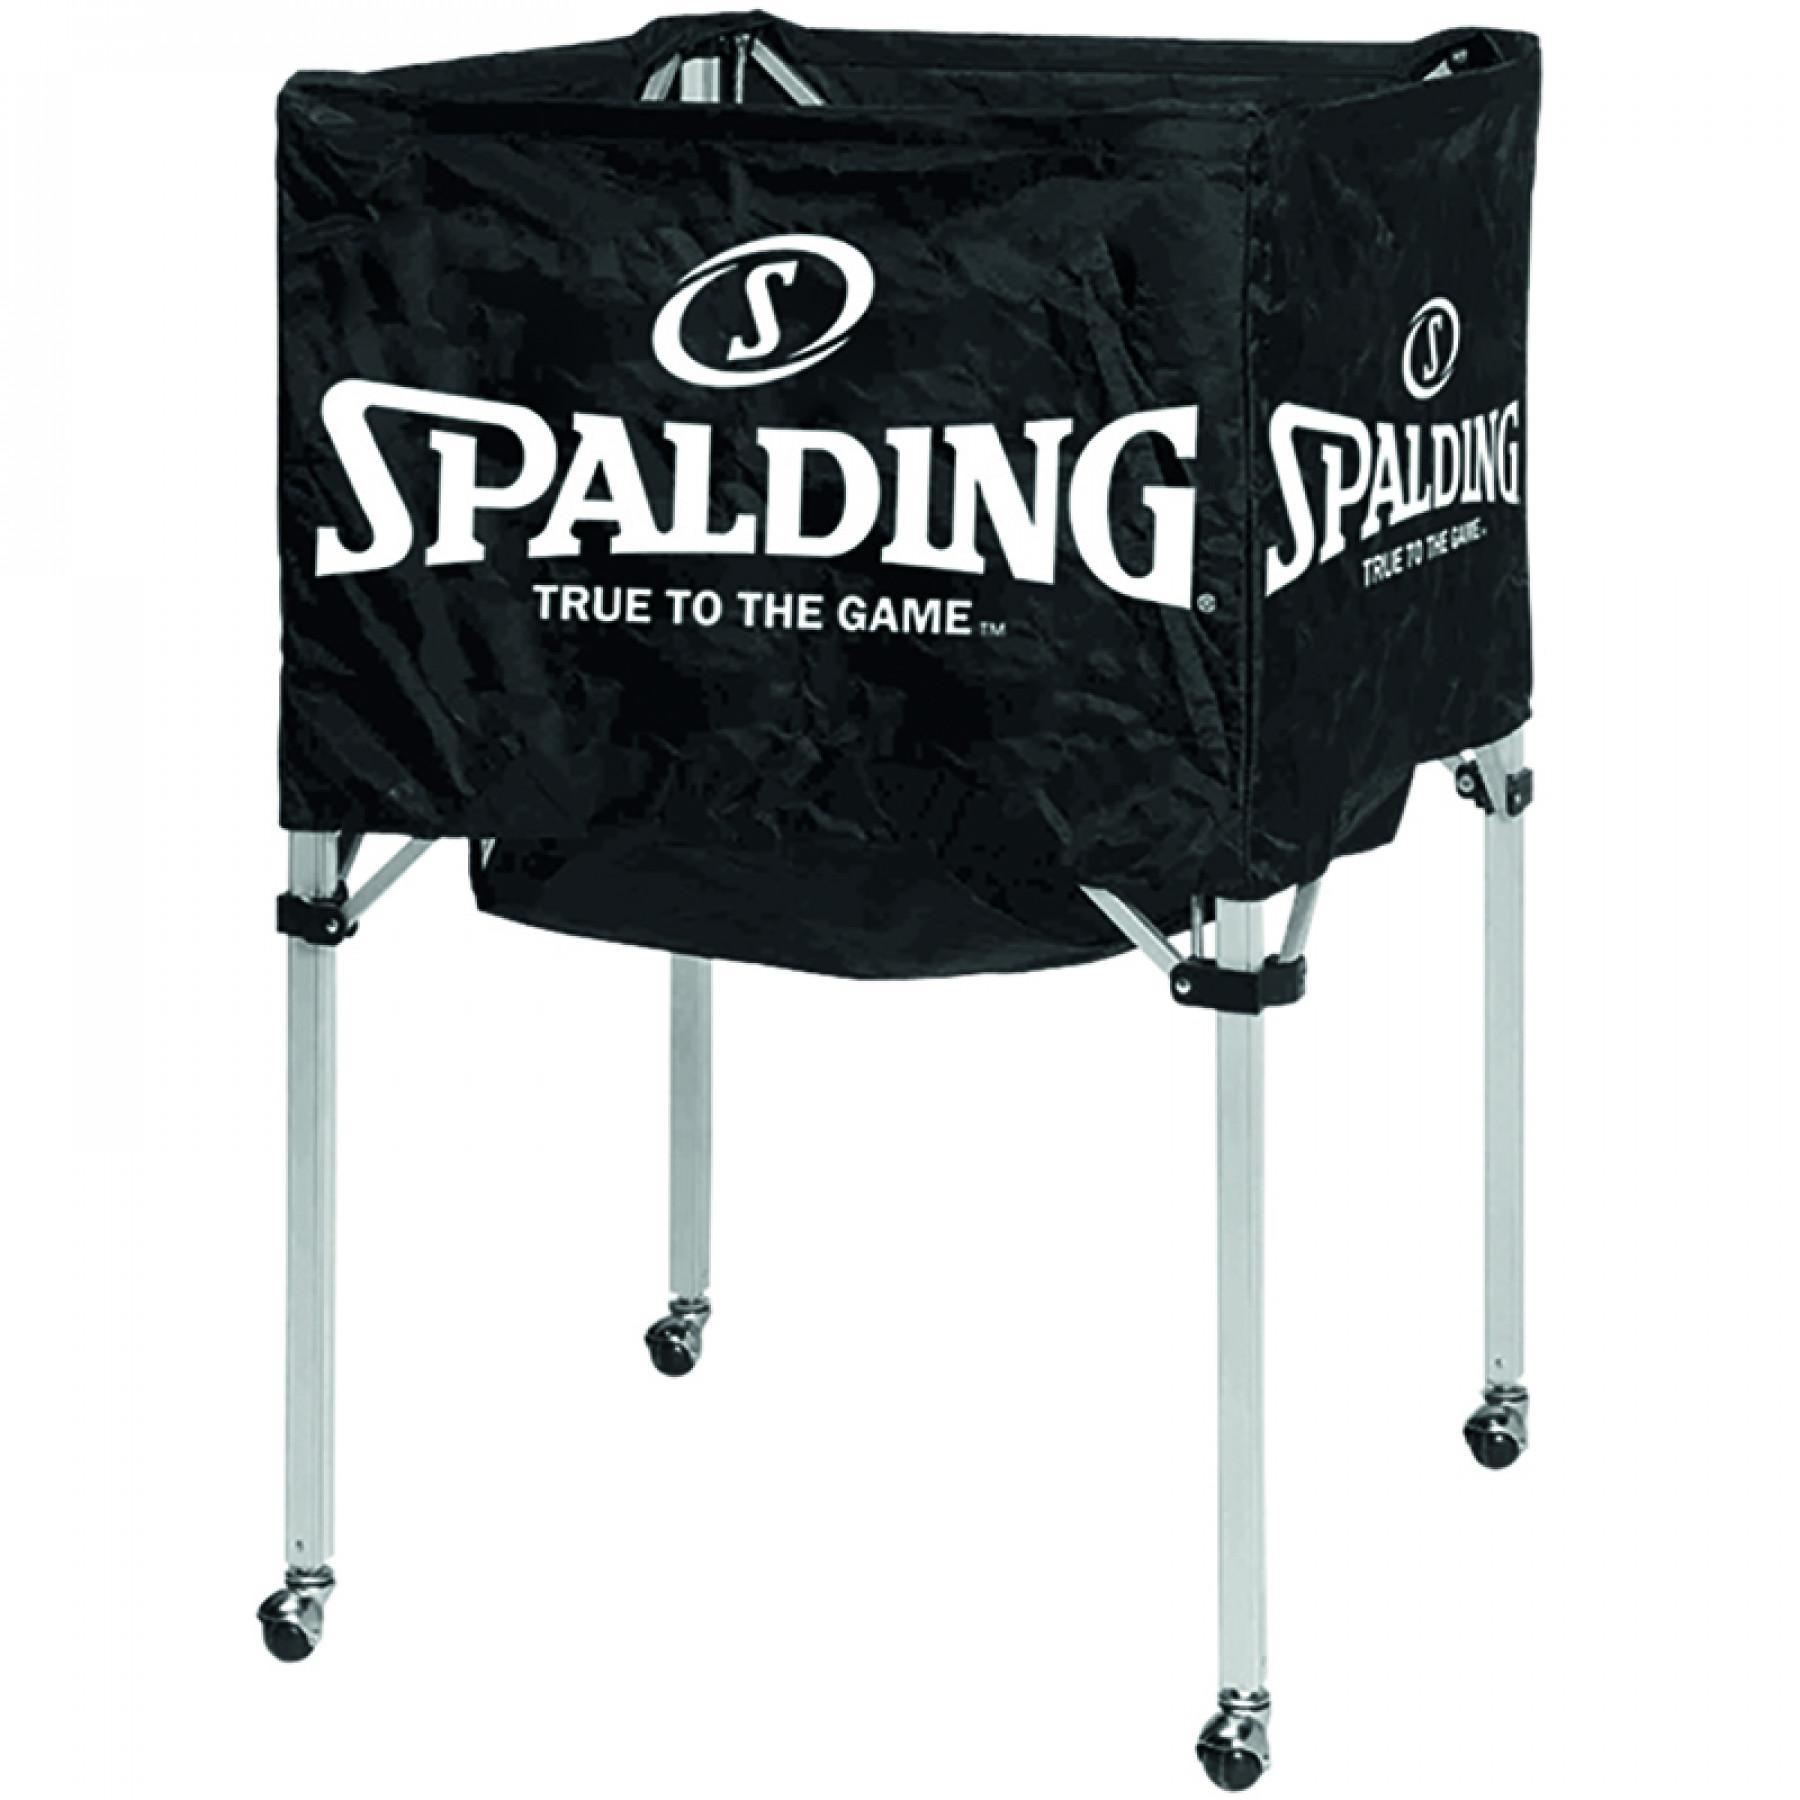 Składany wózek na balony Spalding